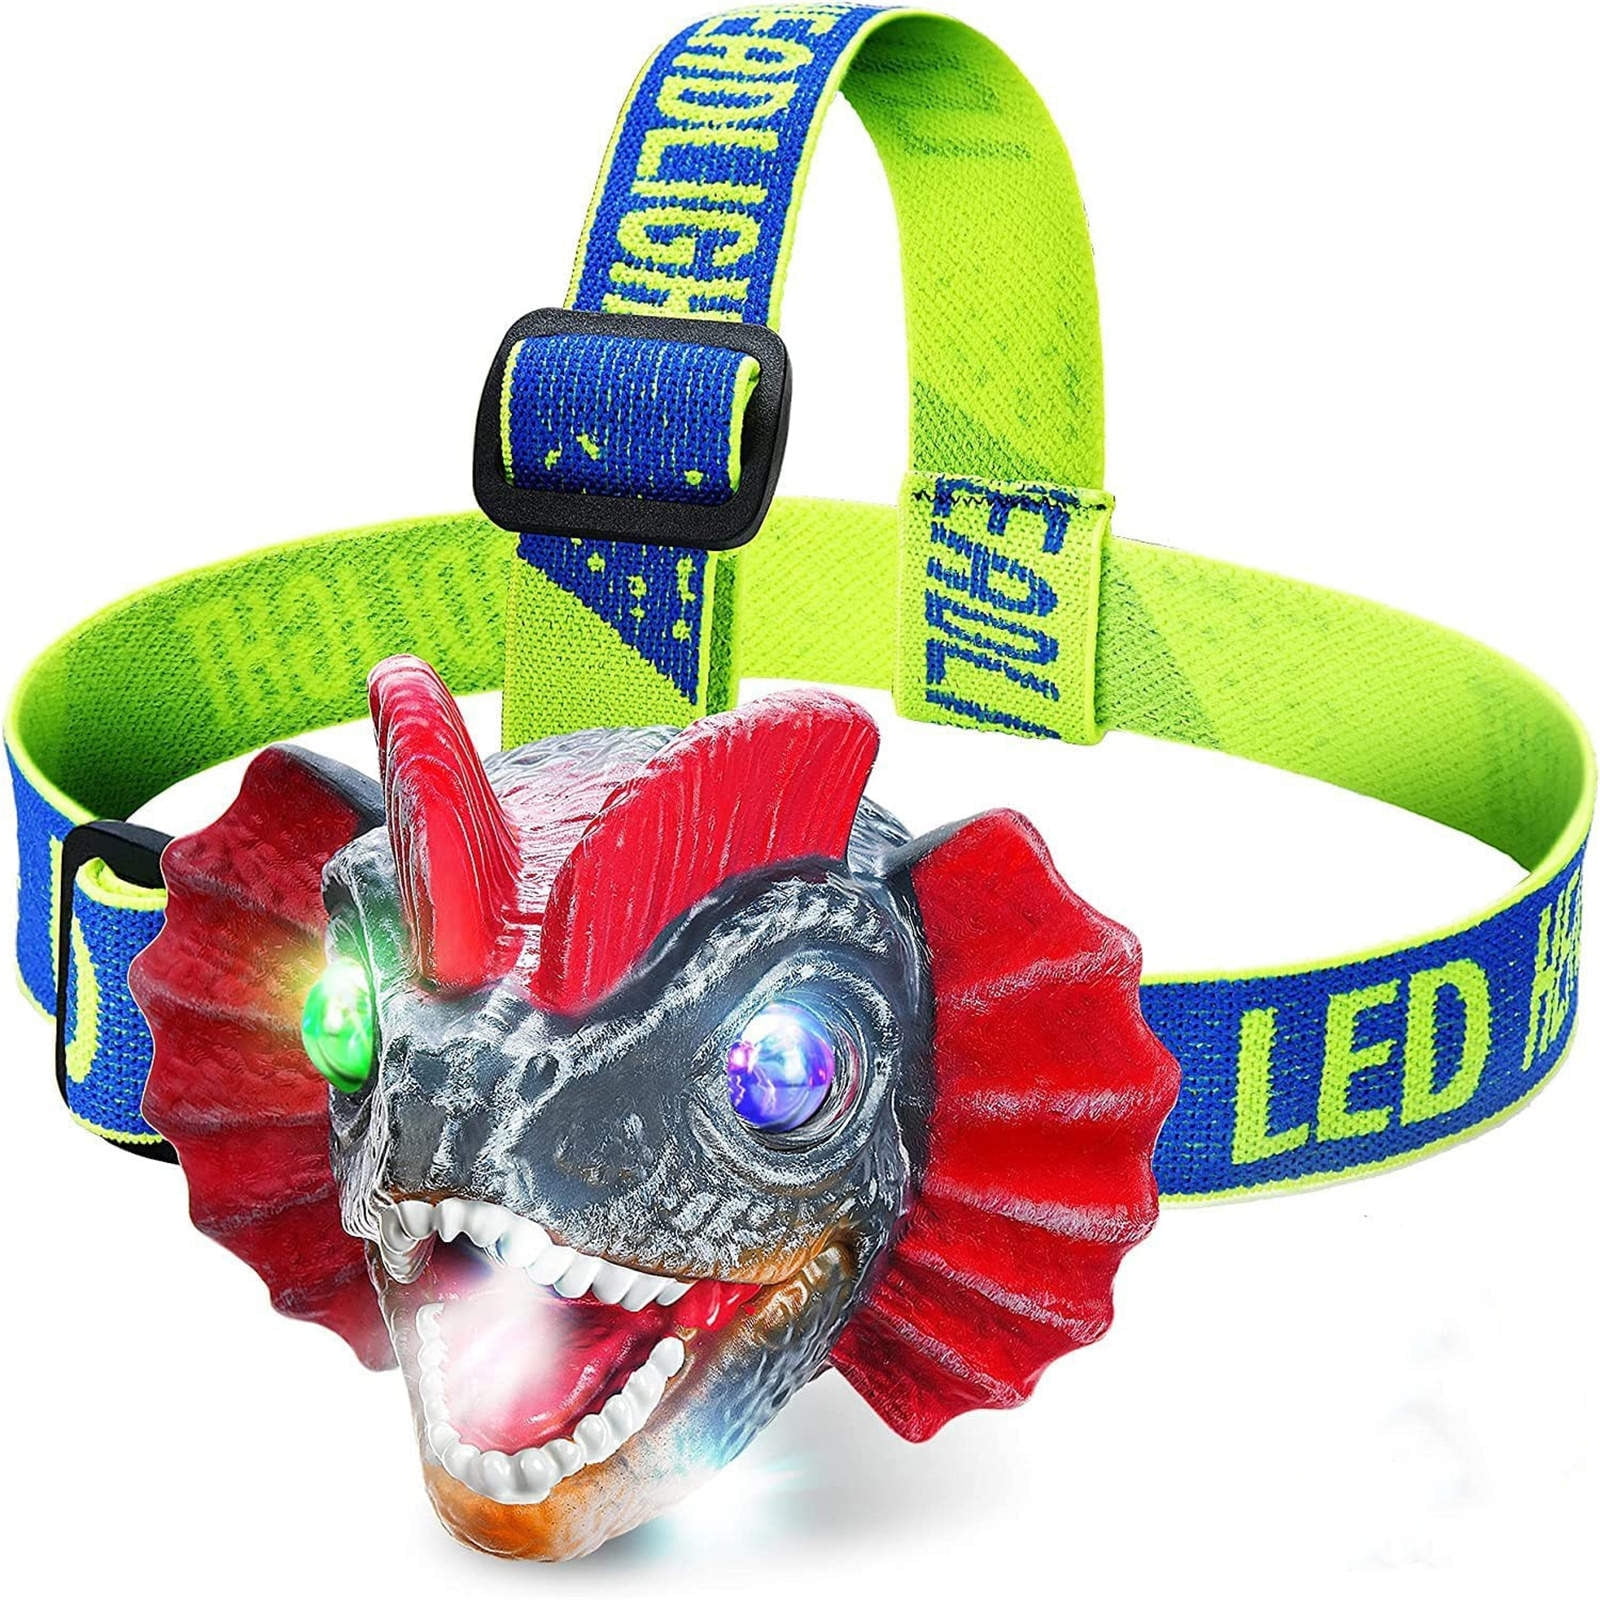 The Original SUN DinoBryte LED Headlamp LIGHT T-Rex Dinosaur for